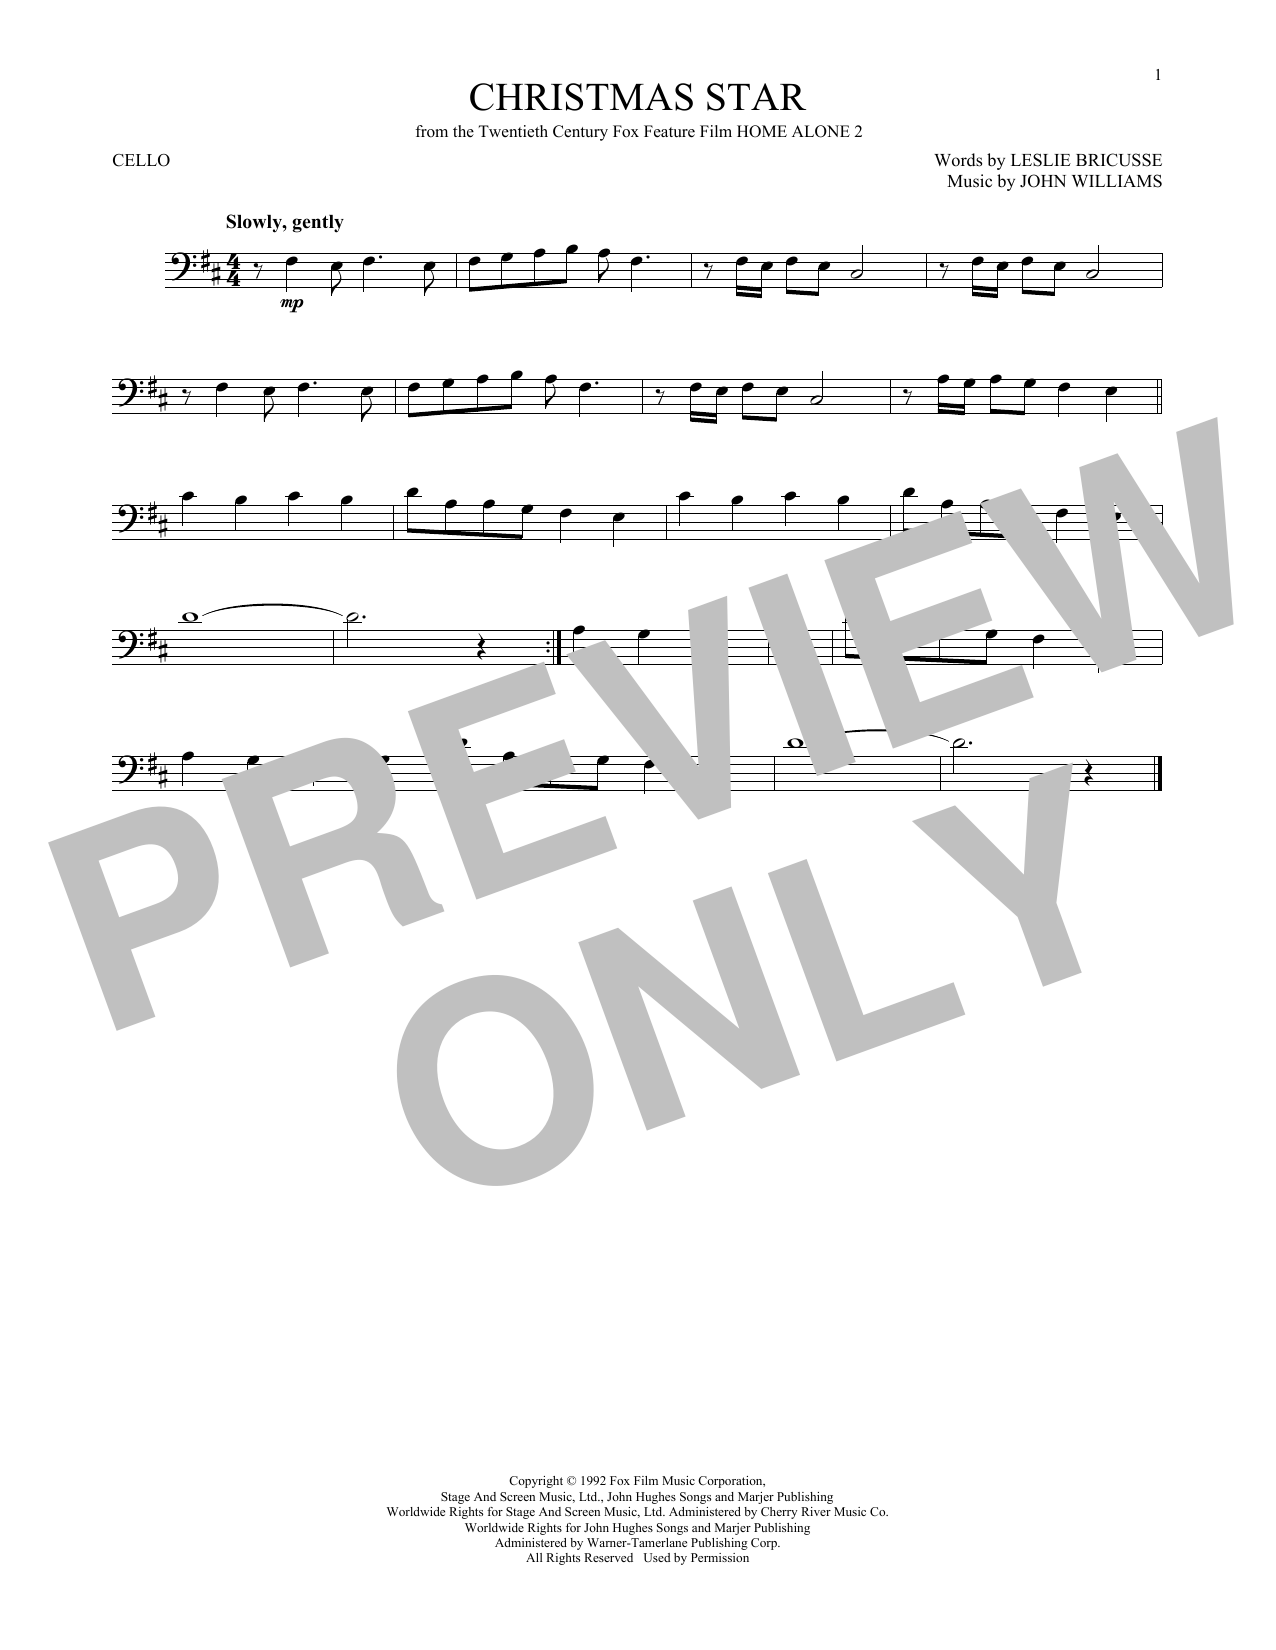 John Williams Christmas Star Sheet Music Notes & Chords for Alto Saxophone - Download or Print PDF